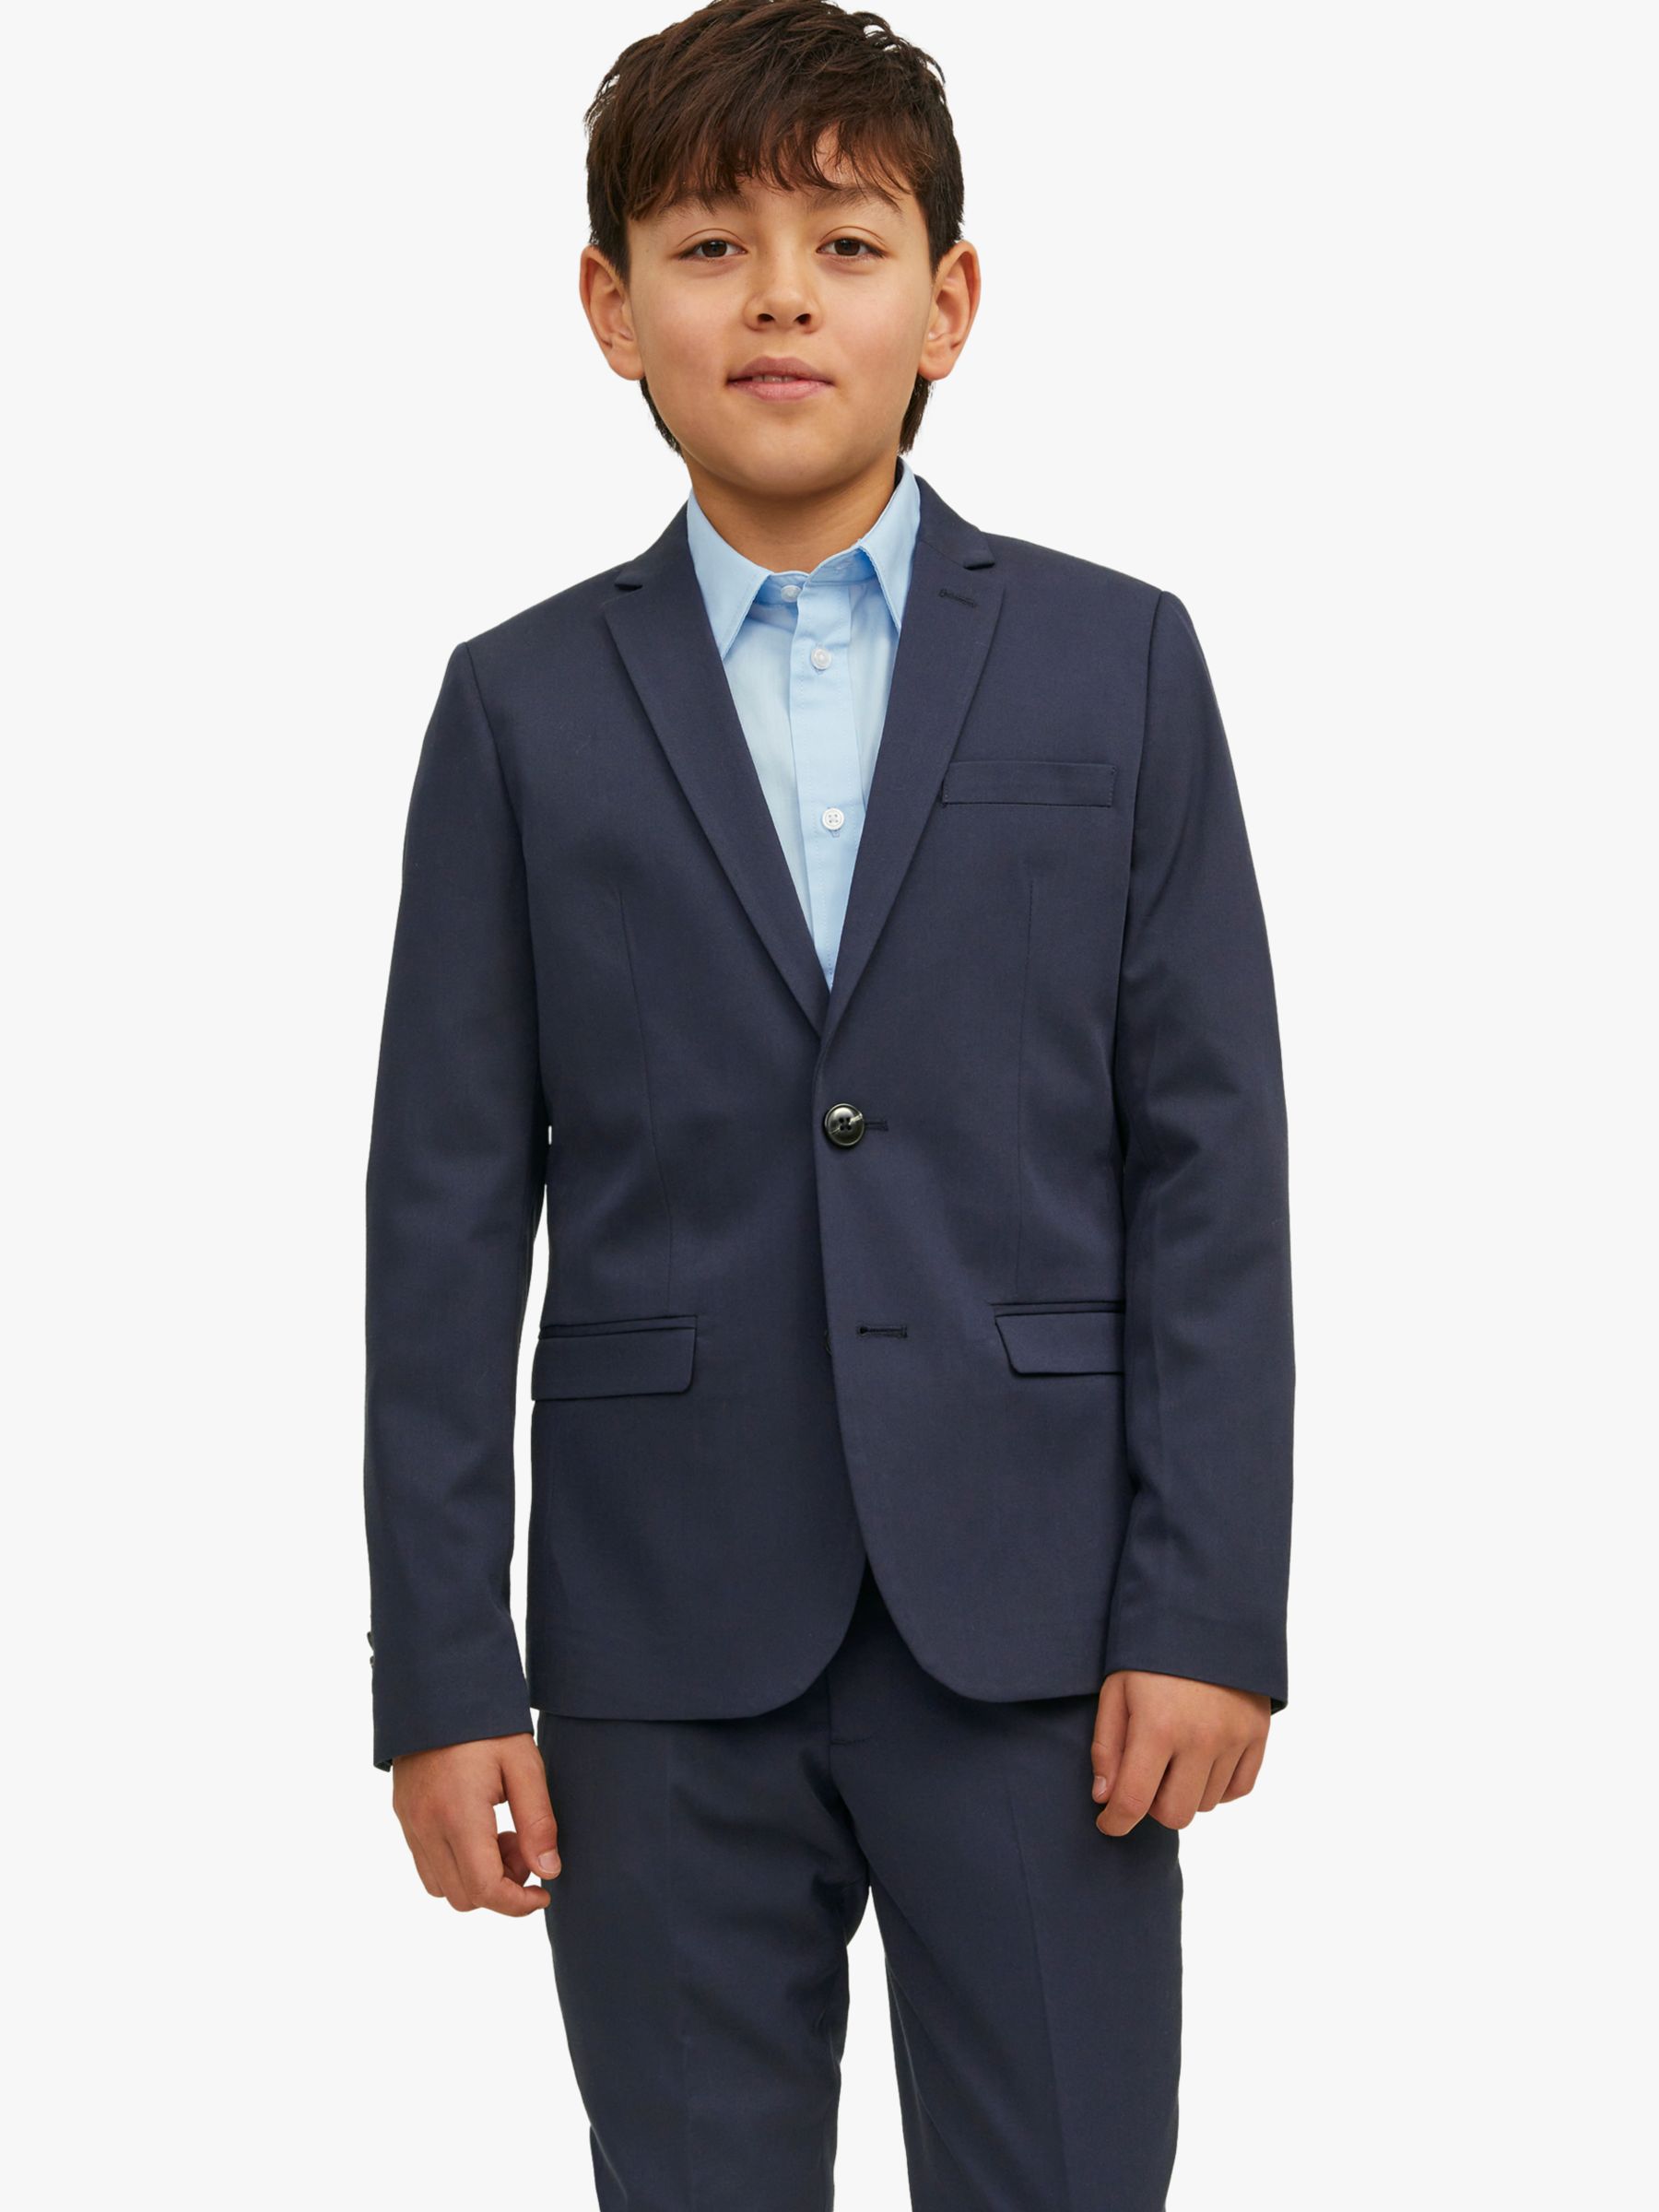 Jack & Jones Kids' Suit Blazer, Navy at John Lewis & Partners